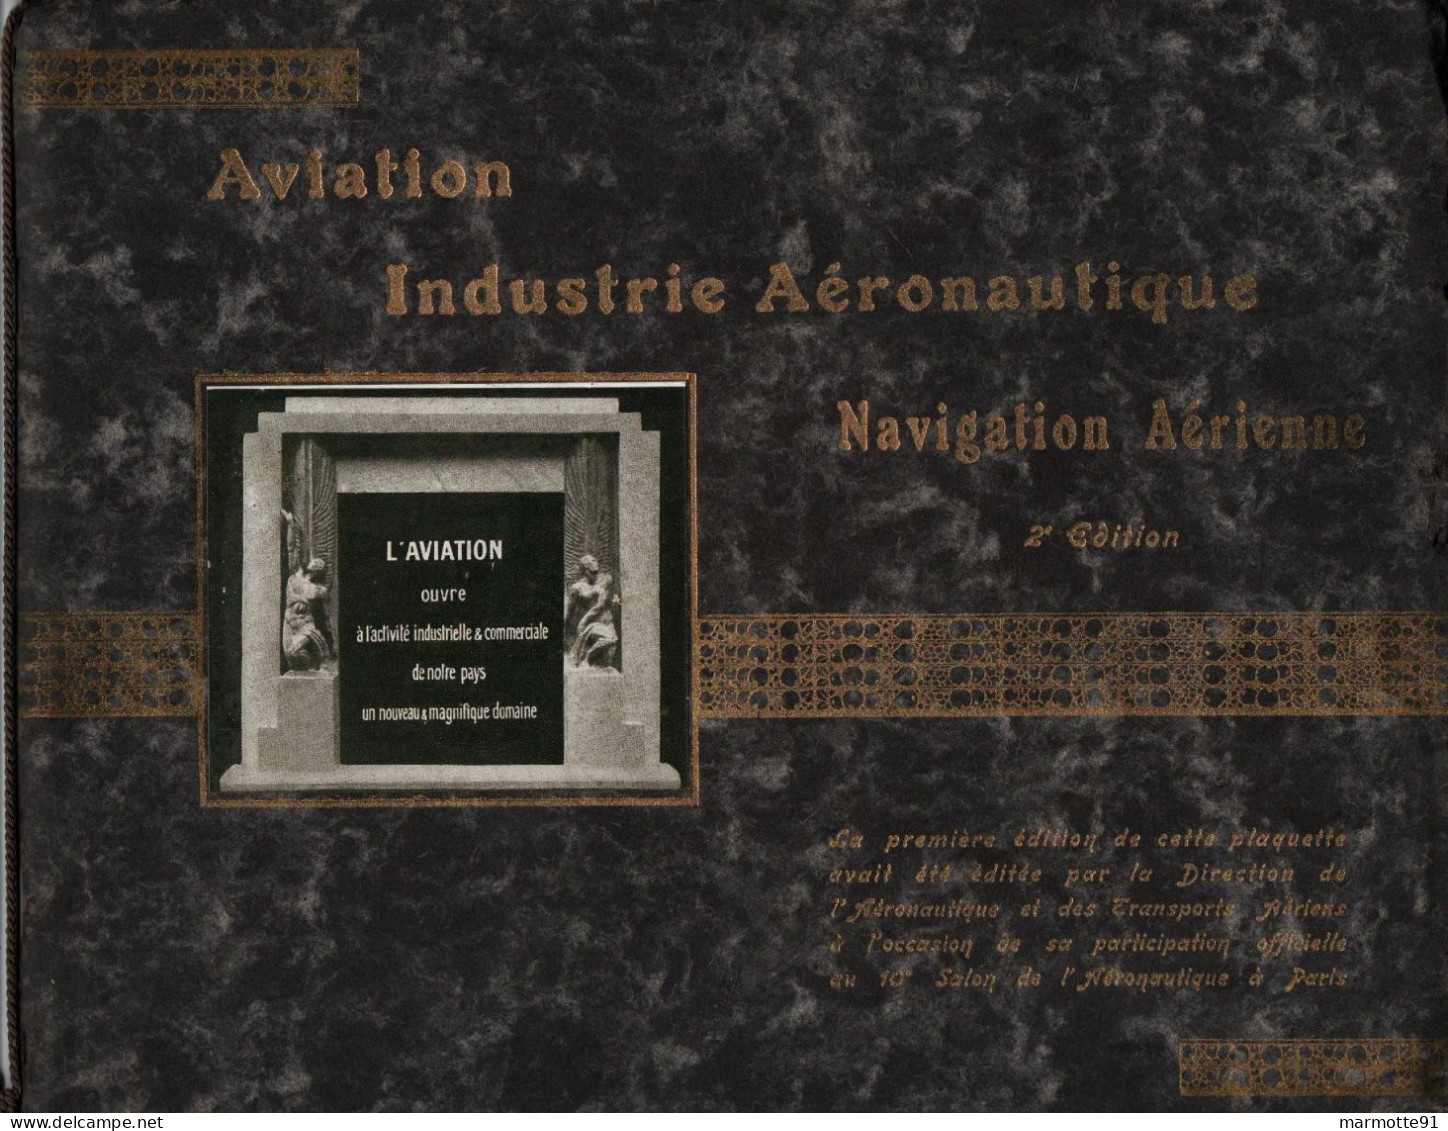 AVIATION INDUSTRIE AERONAUTIQUE NAVIGATION AERIENNE 2e EDITION  10e SALON AERONAUTIQUE PARIS - Avion